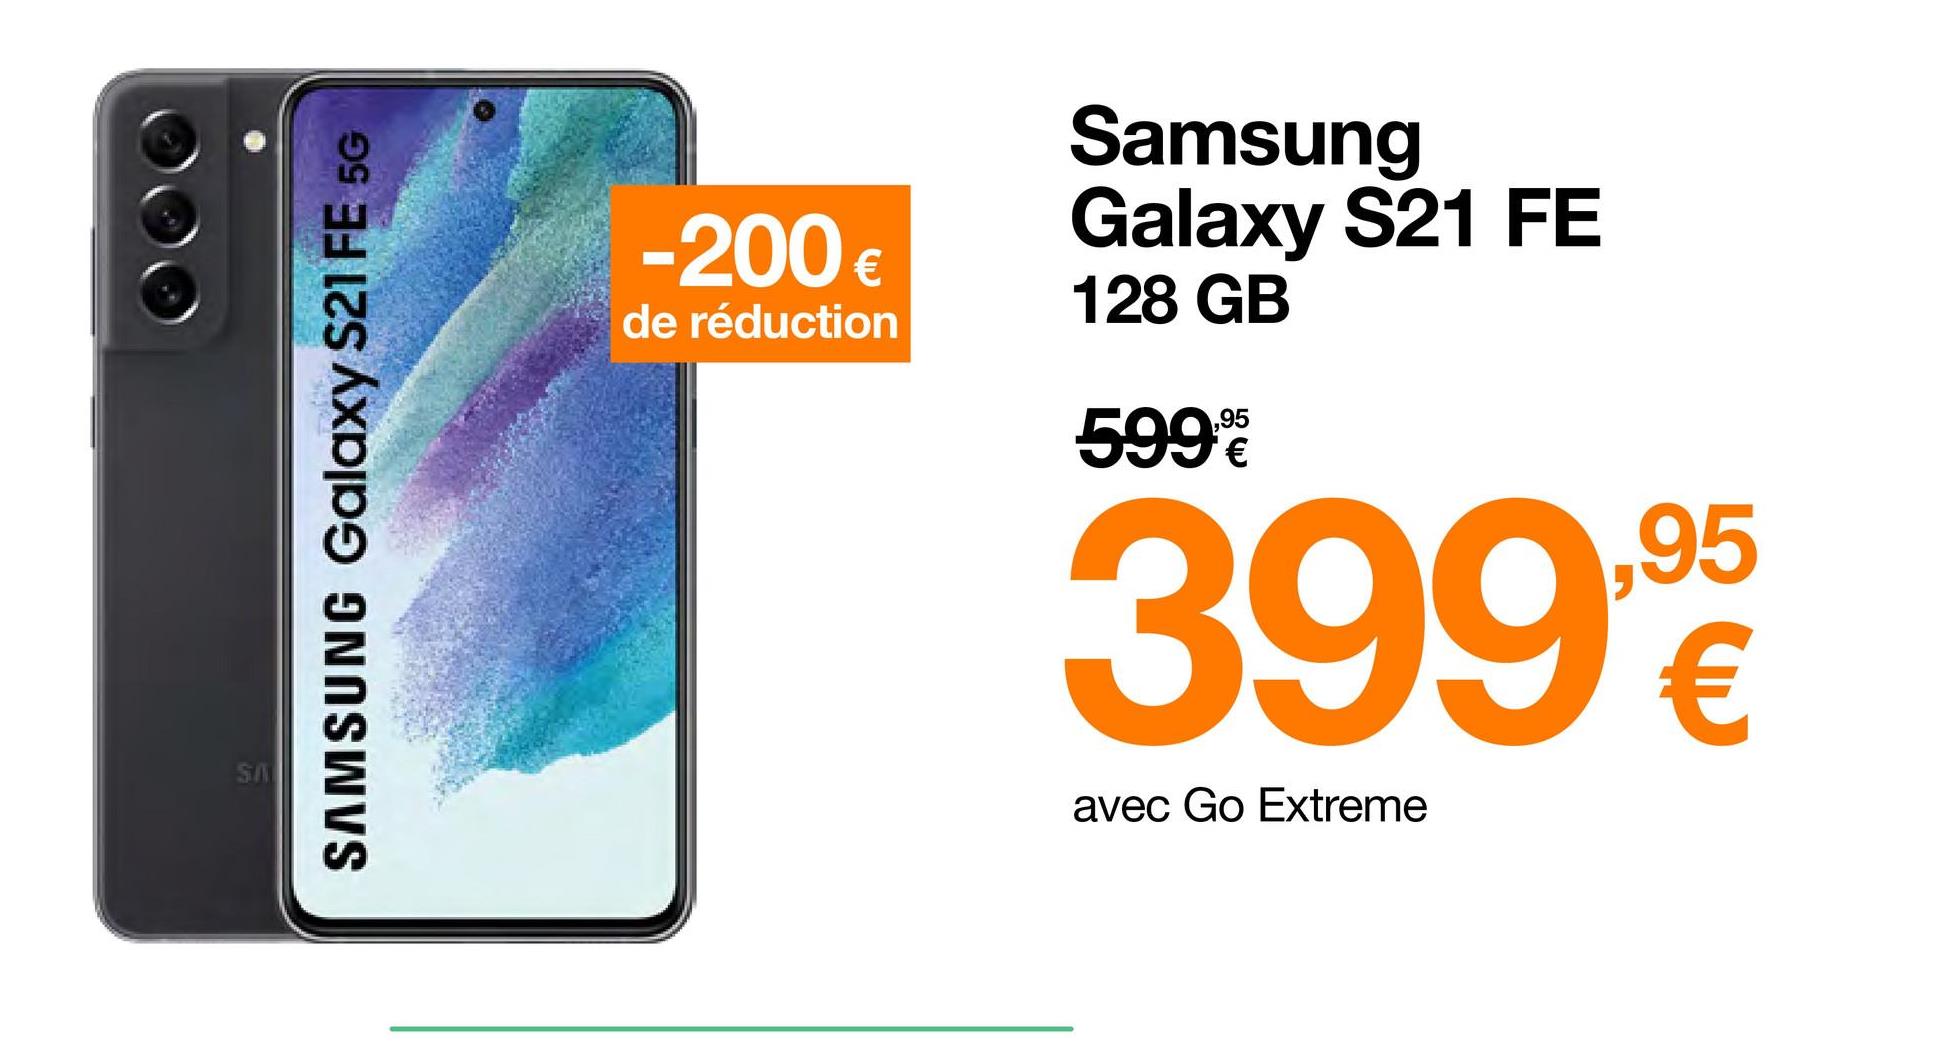 SA
SAMSUNG Galaxy S21 FE 5G
-200 €
de réduction
Samsung
Galaxy S21 FE
128 GB
599
.95
399,90
€
avec Go Extreme